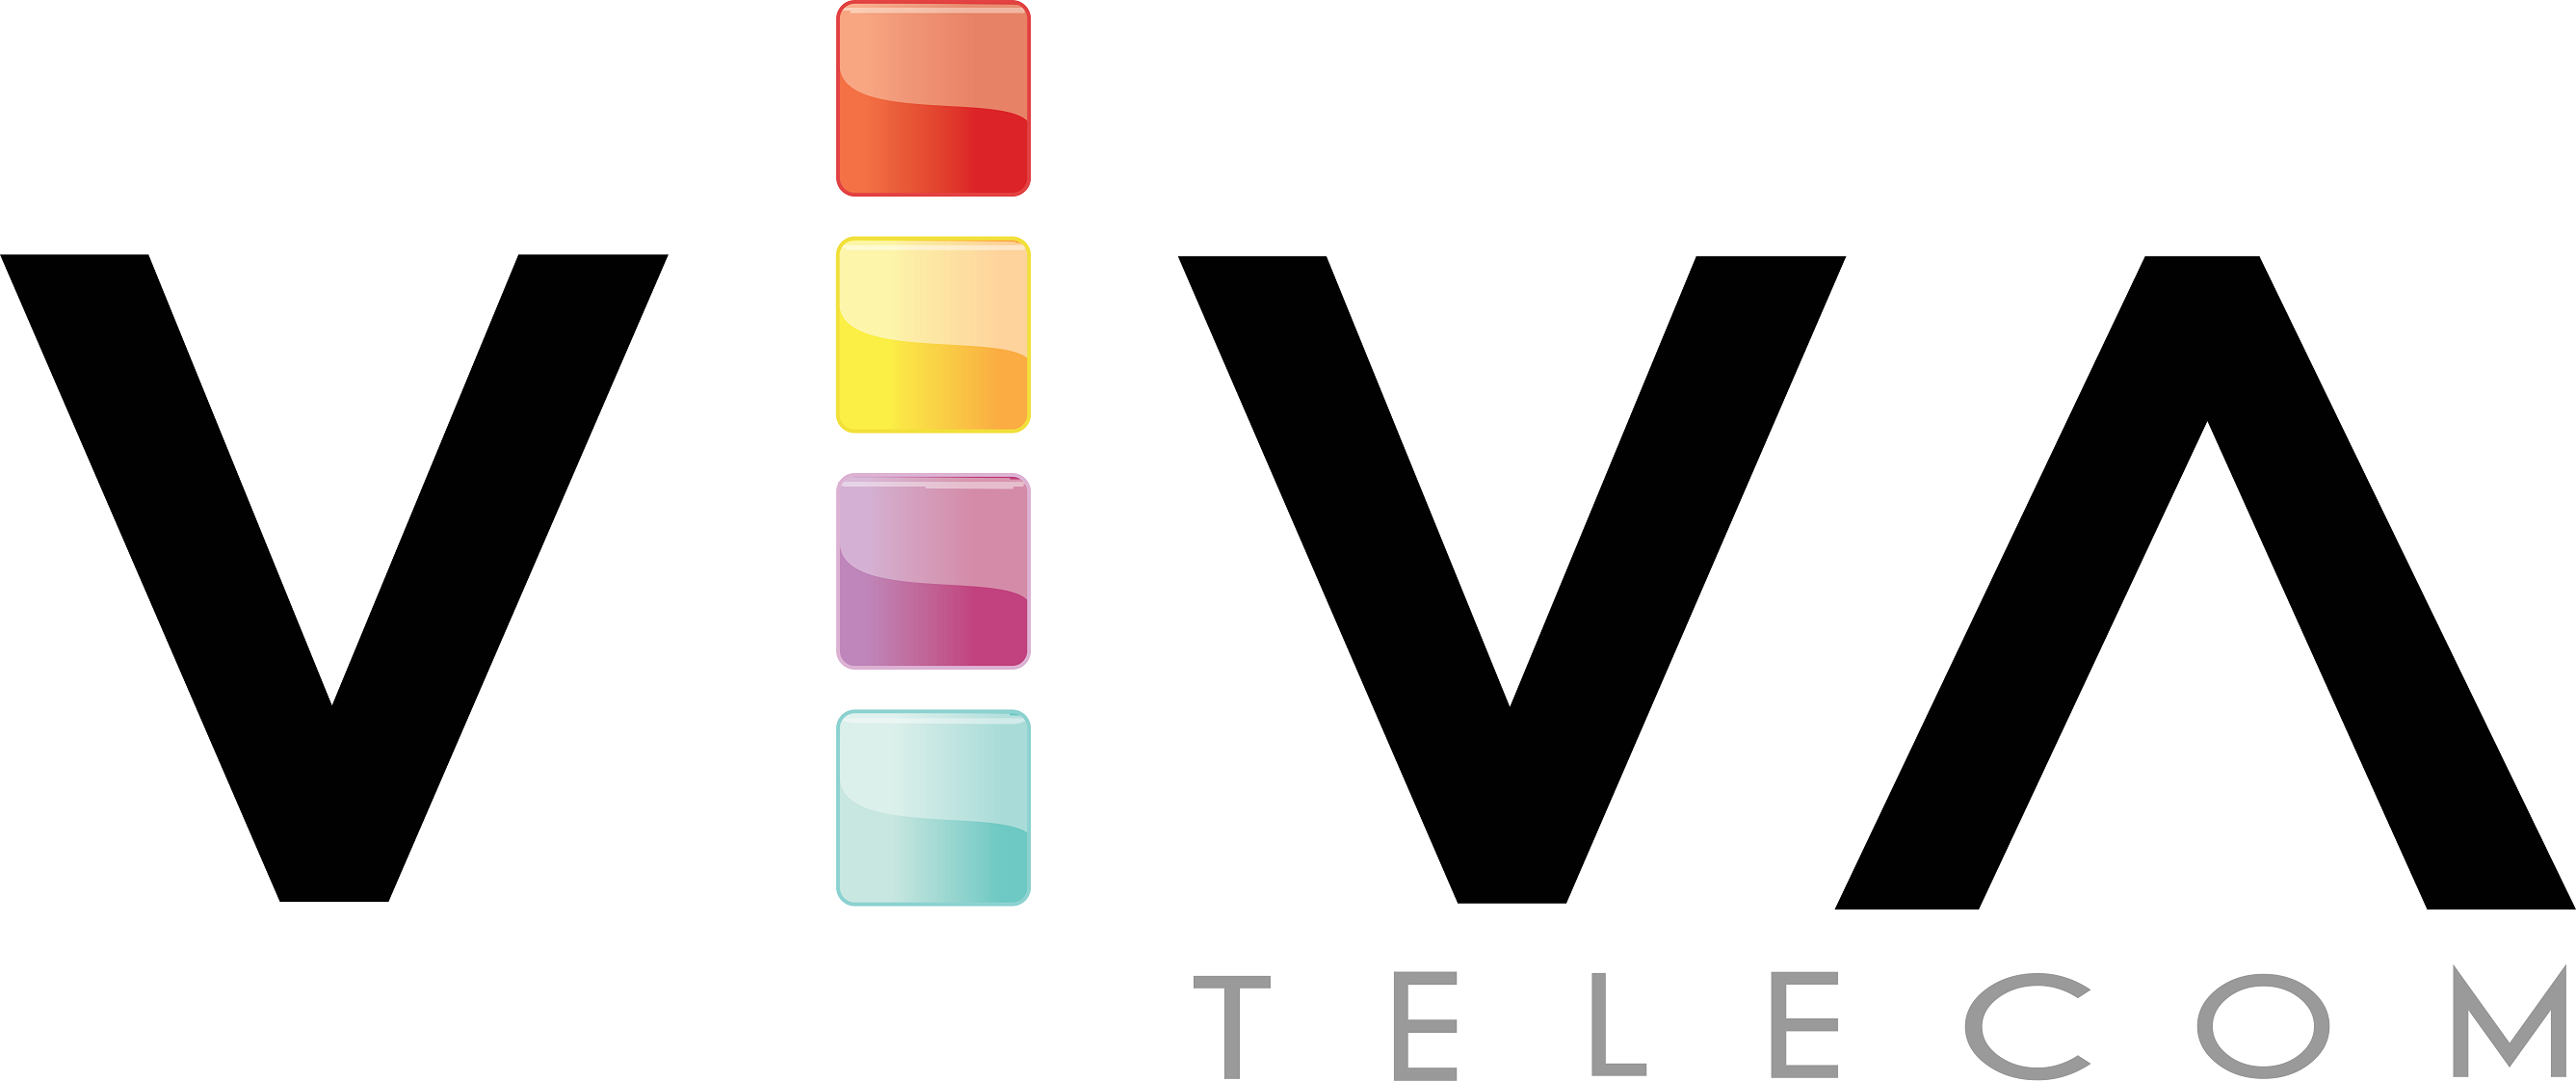 Viva Telecom